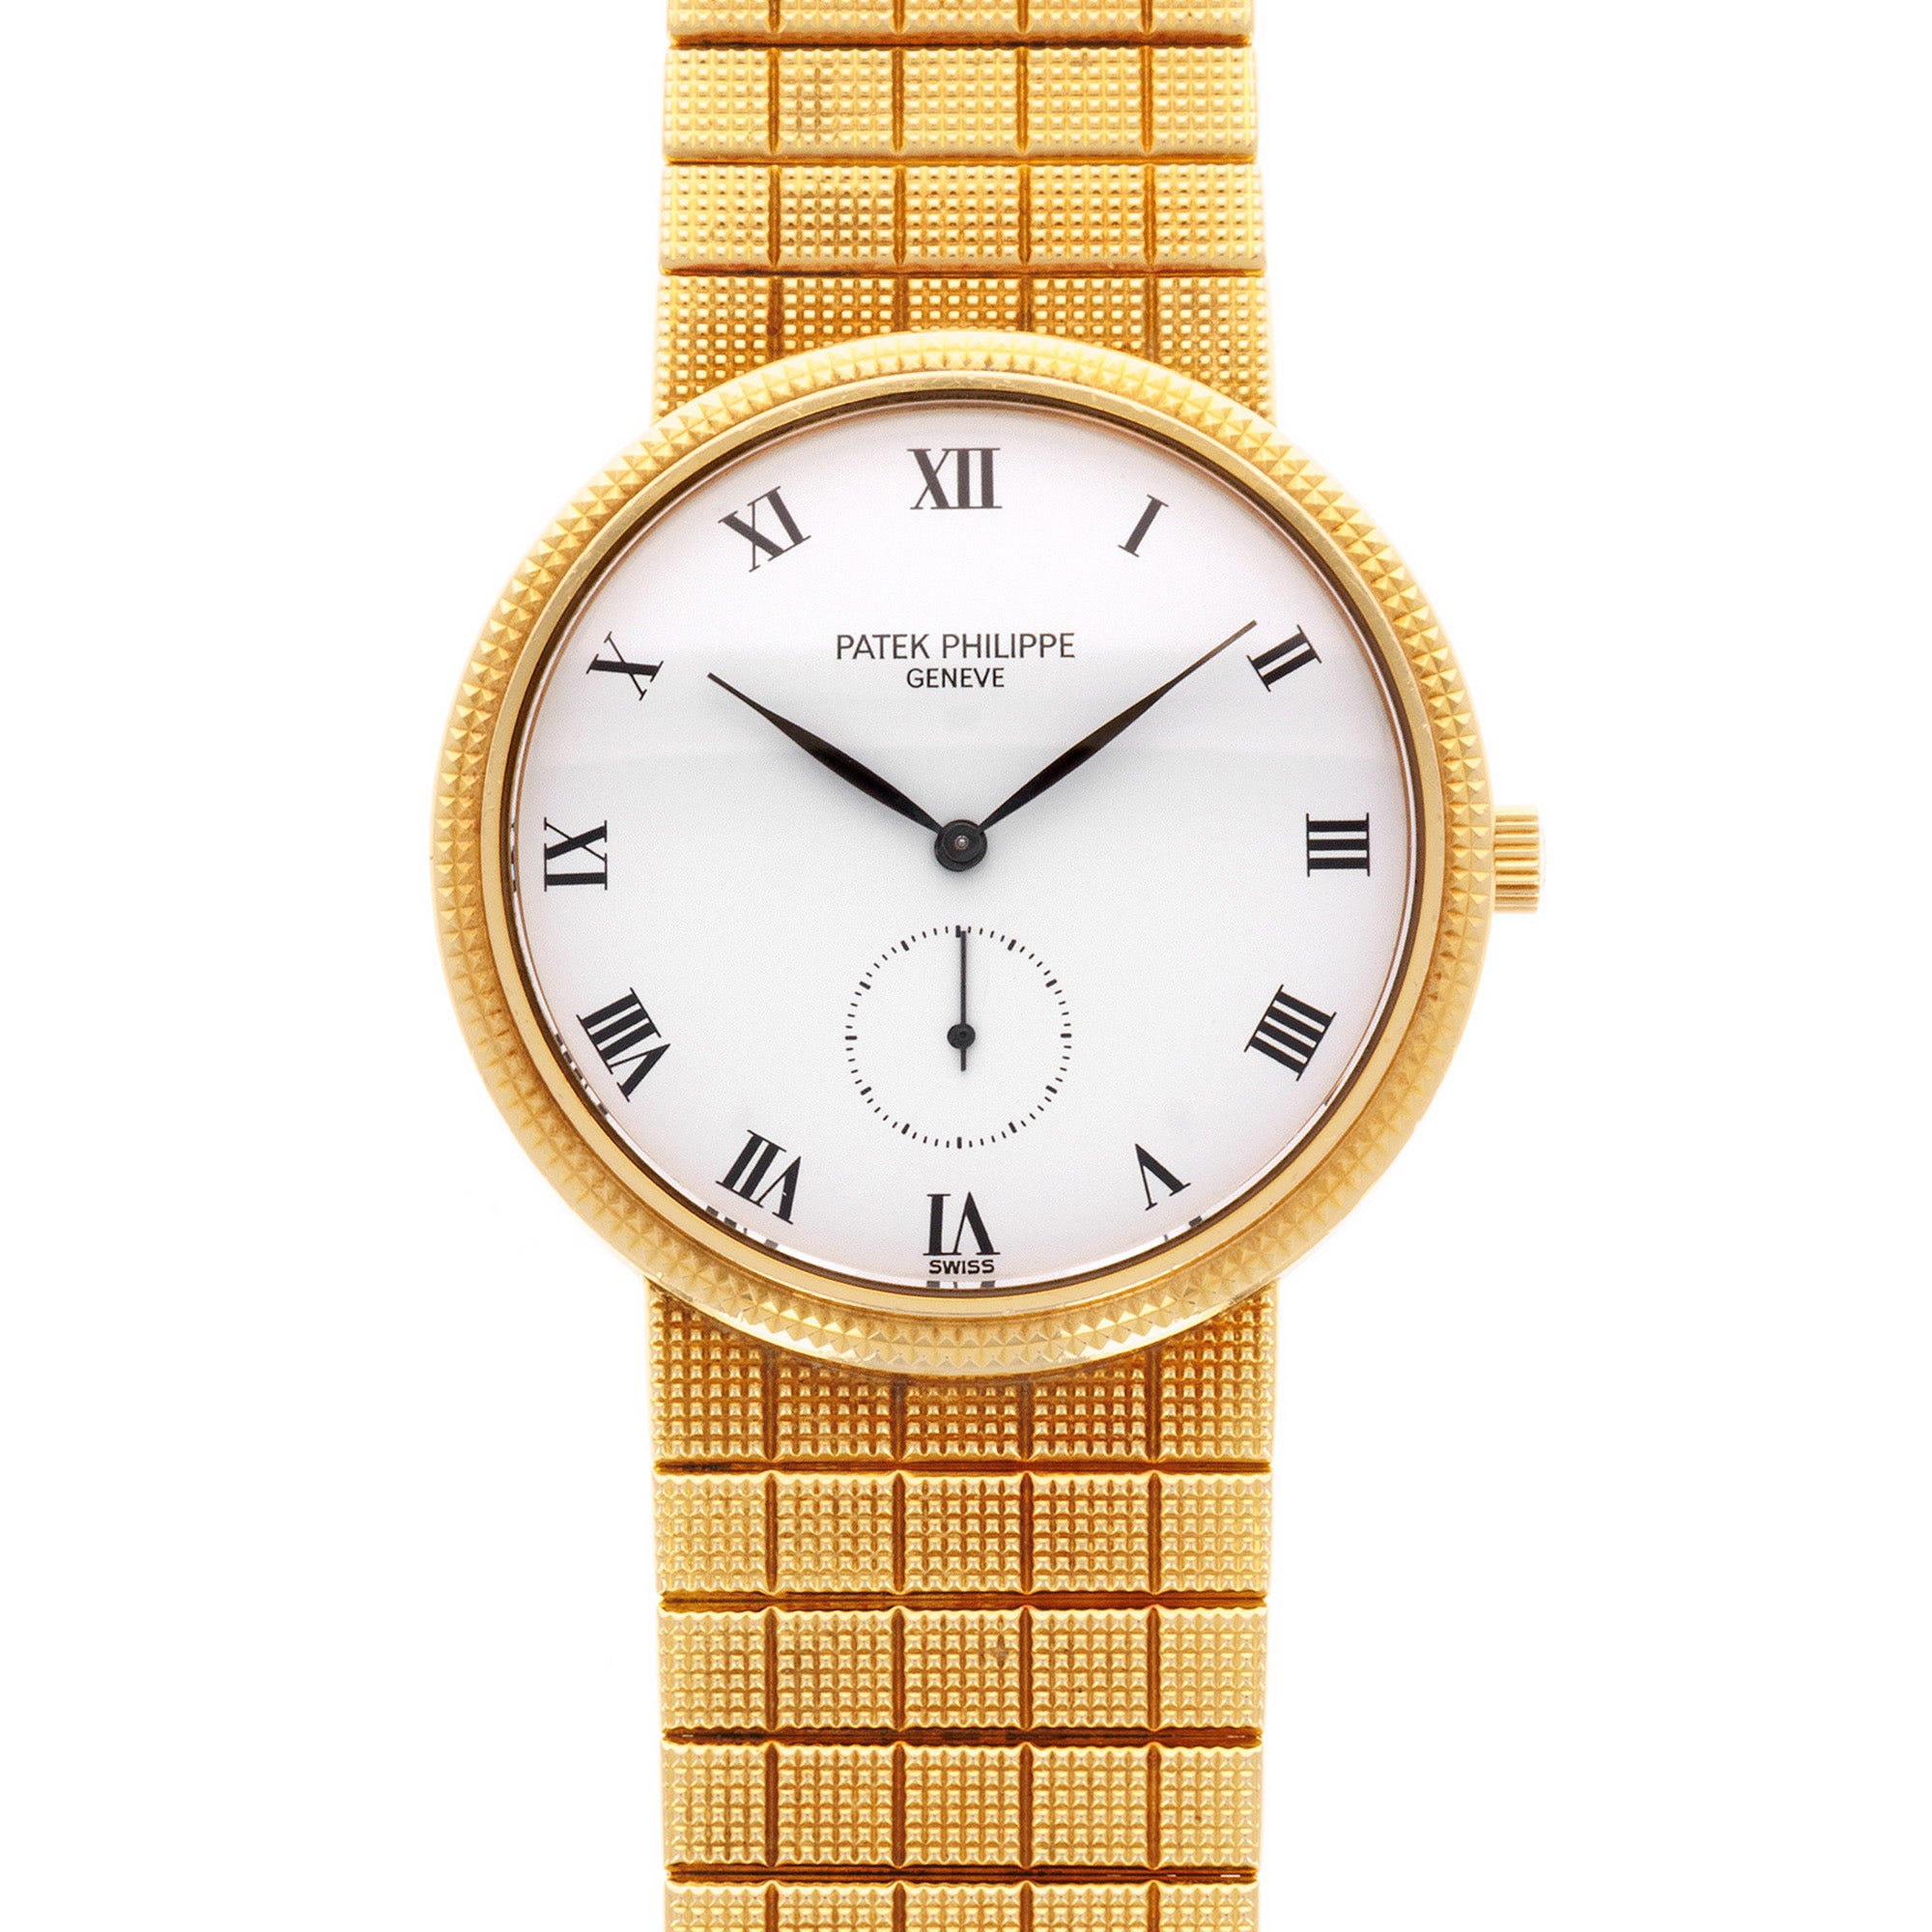 Patek Philippe - Patek Philippe Yellow Gold Calatrava Ref. 3919 on Bracelet - The Keystone Watches